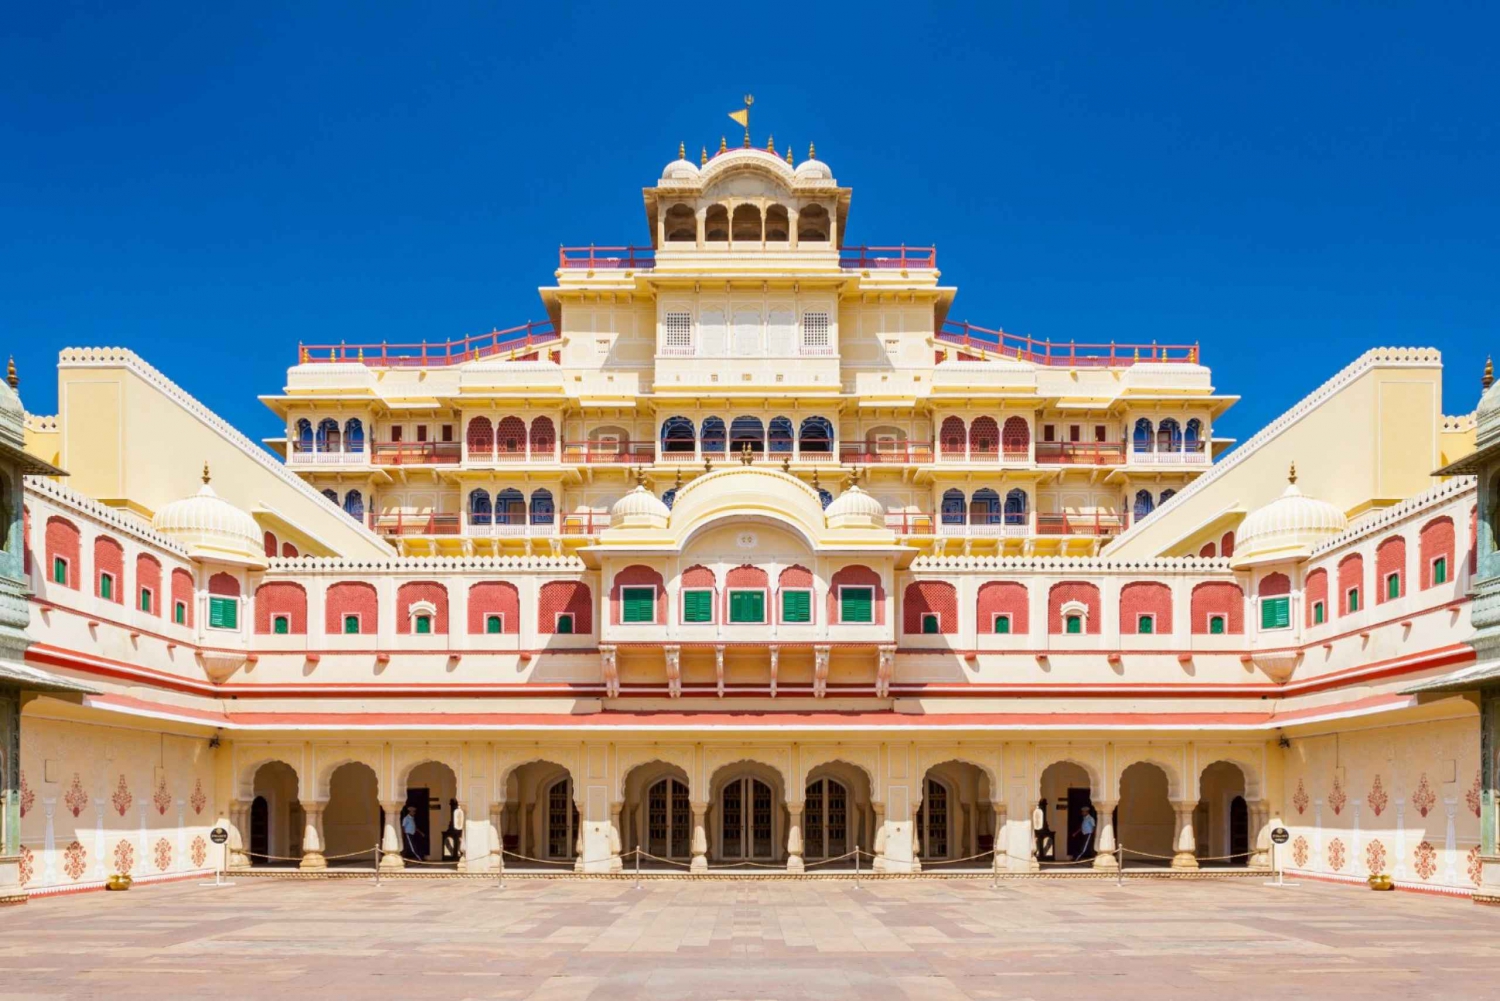 Från Jaipur: Privat halvdags stadsrundtur med guide